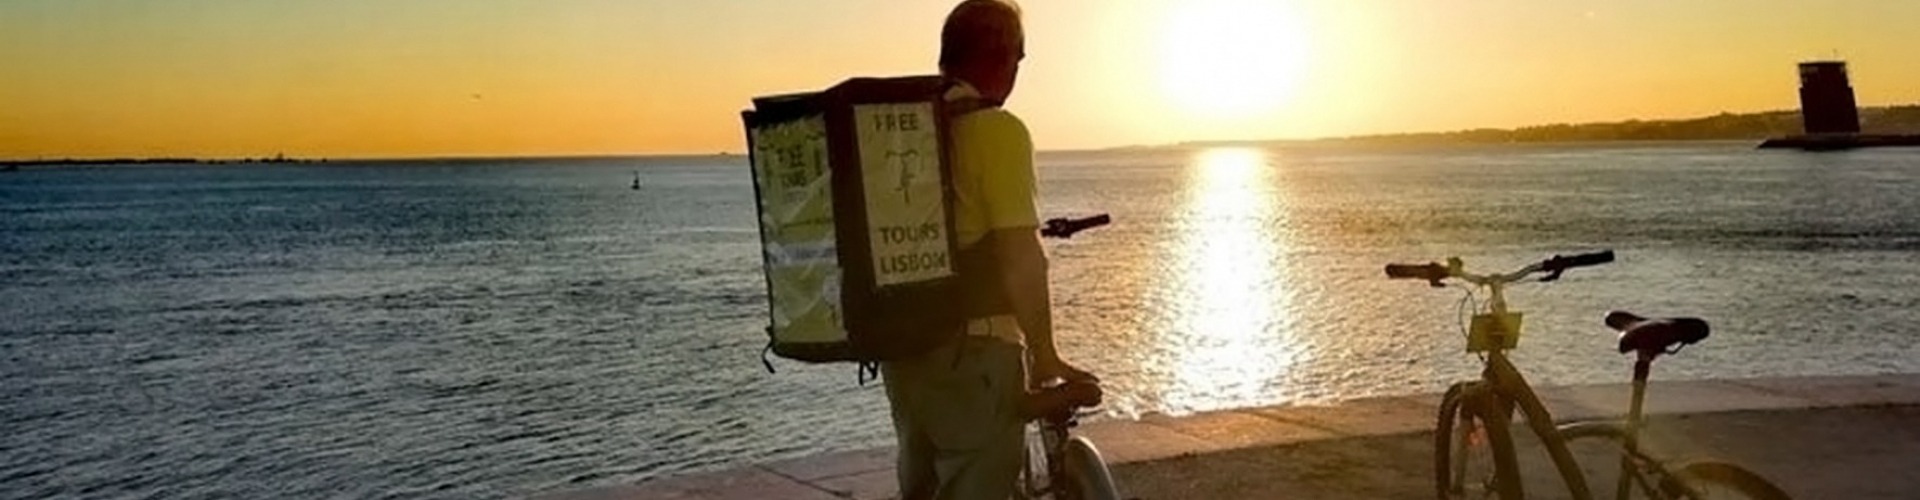 free-bike-tours-lisbon-belem-viewpoint-blog-2-1